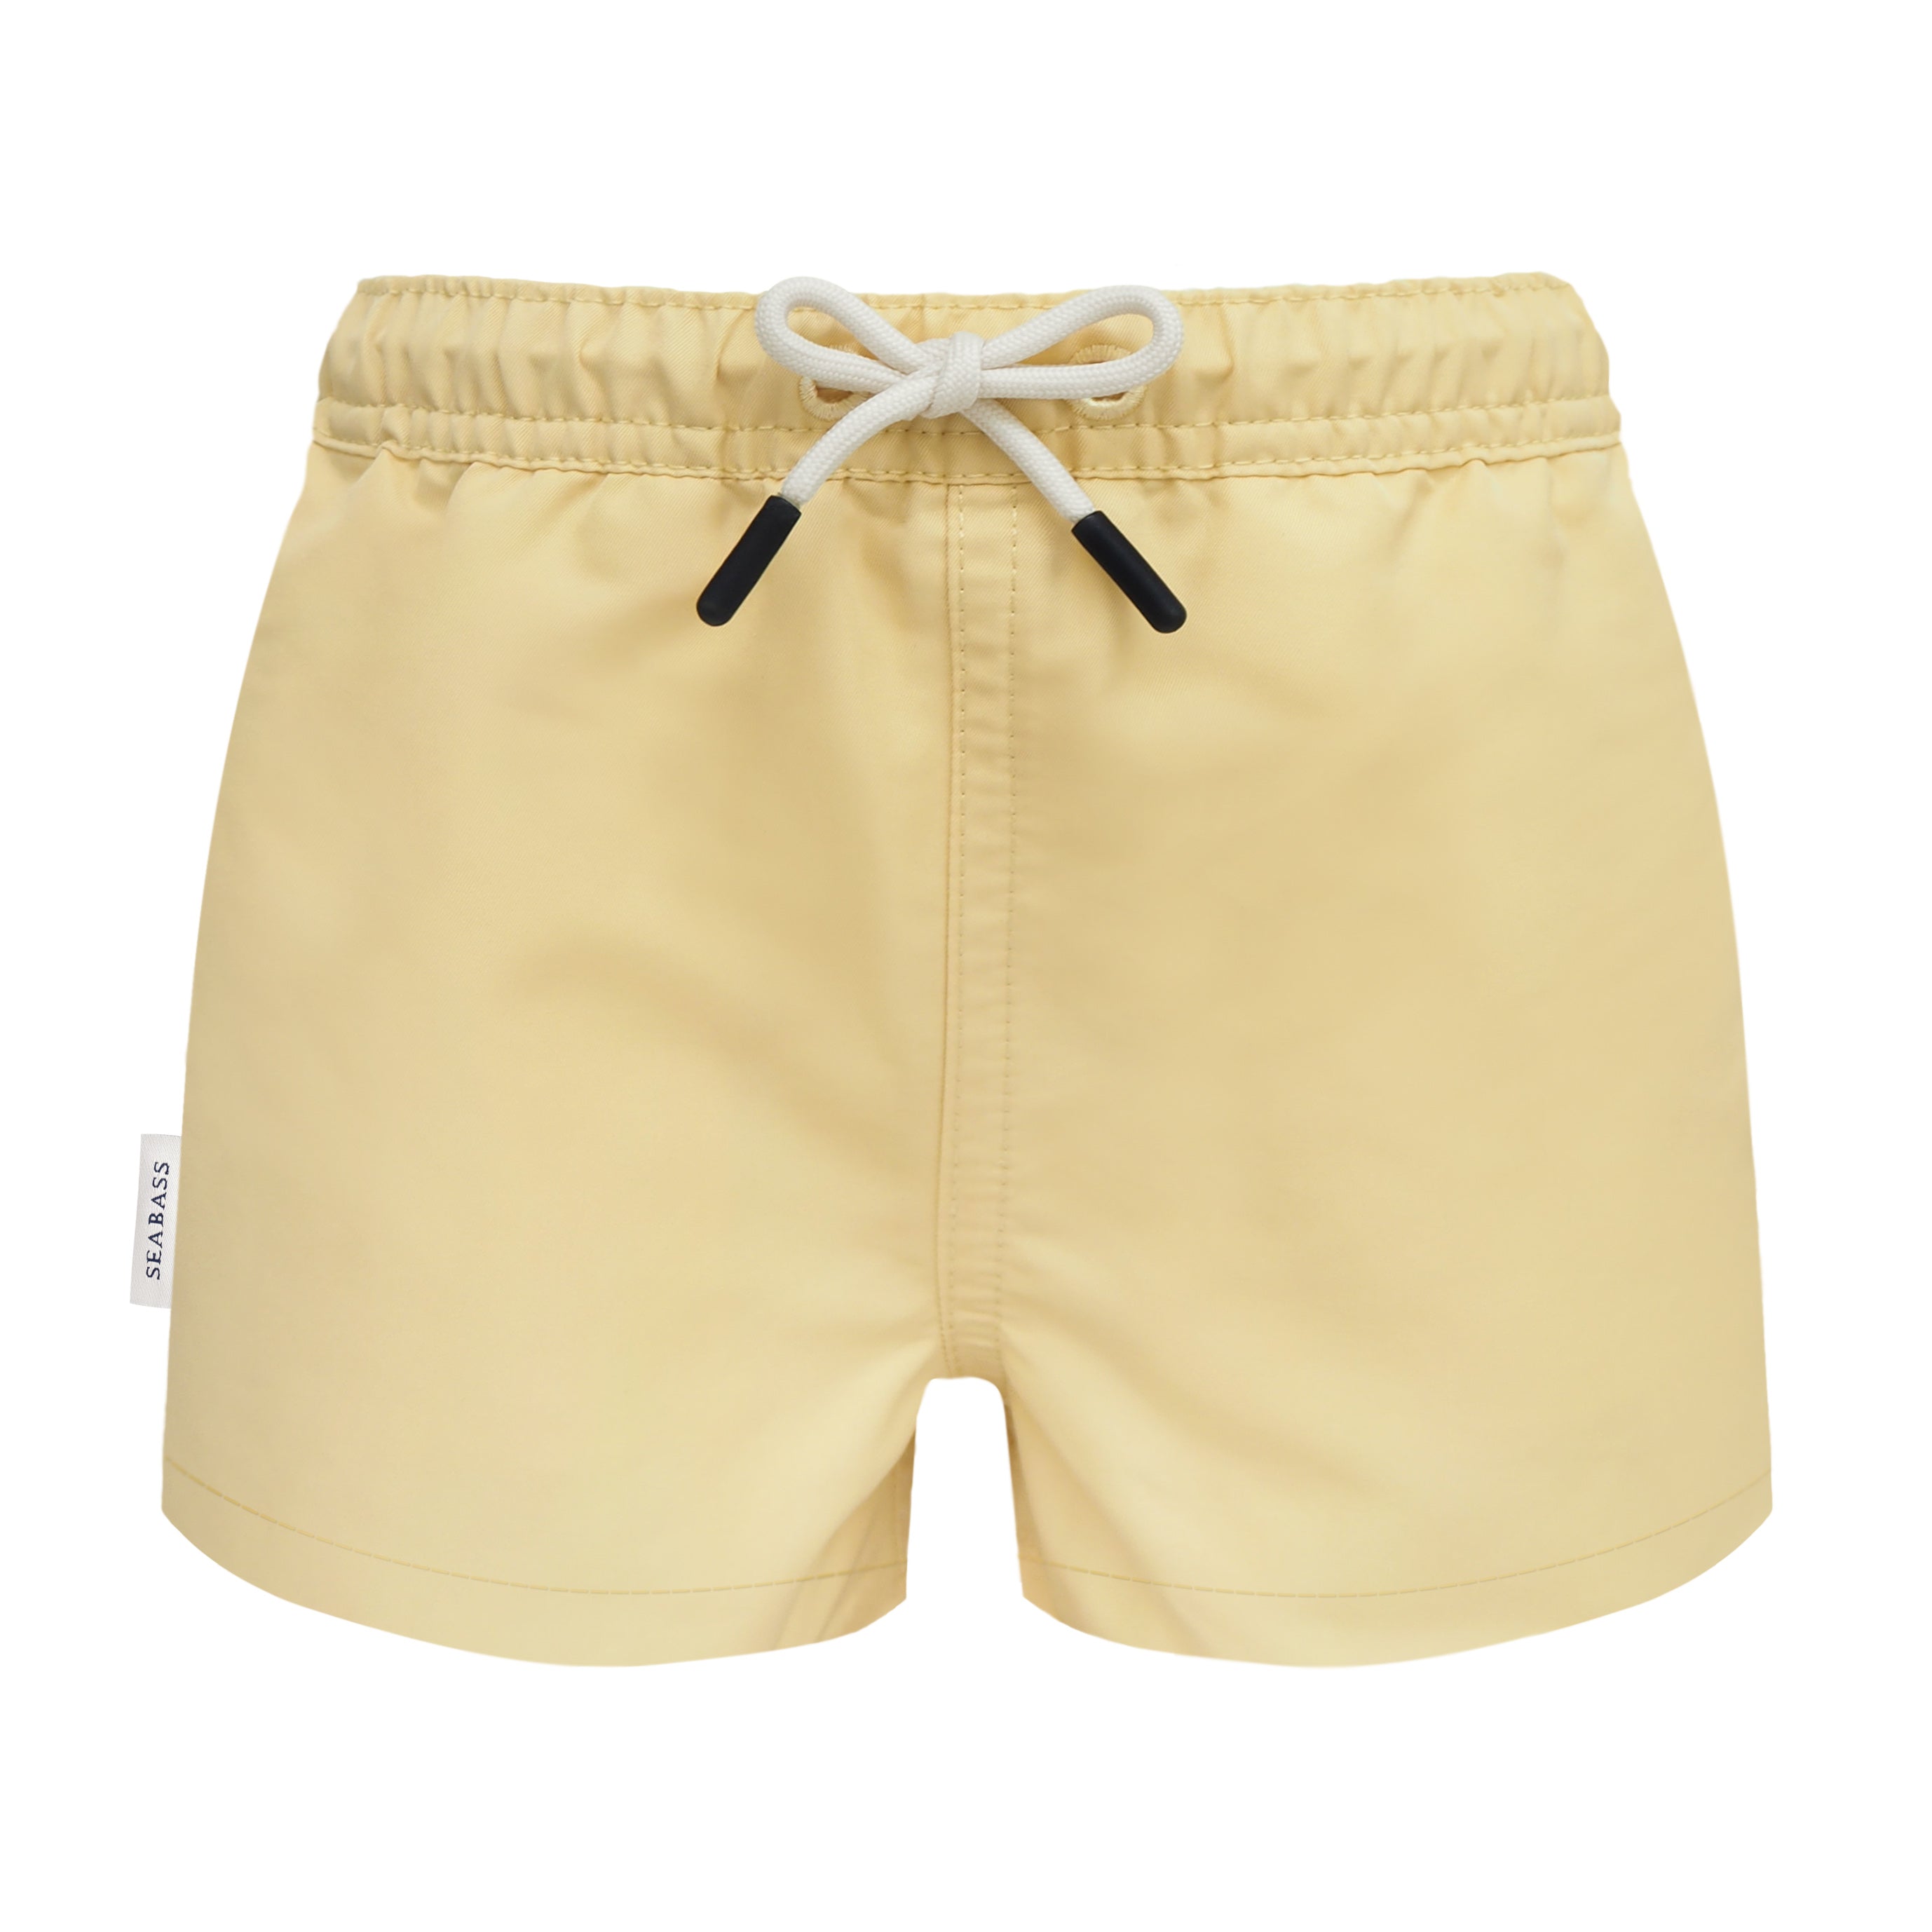 UV Swim Set - Short and Polo Lemon